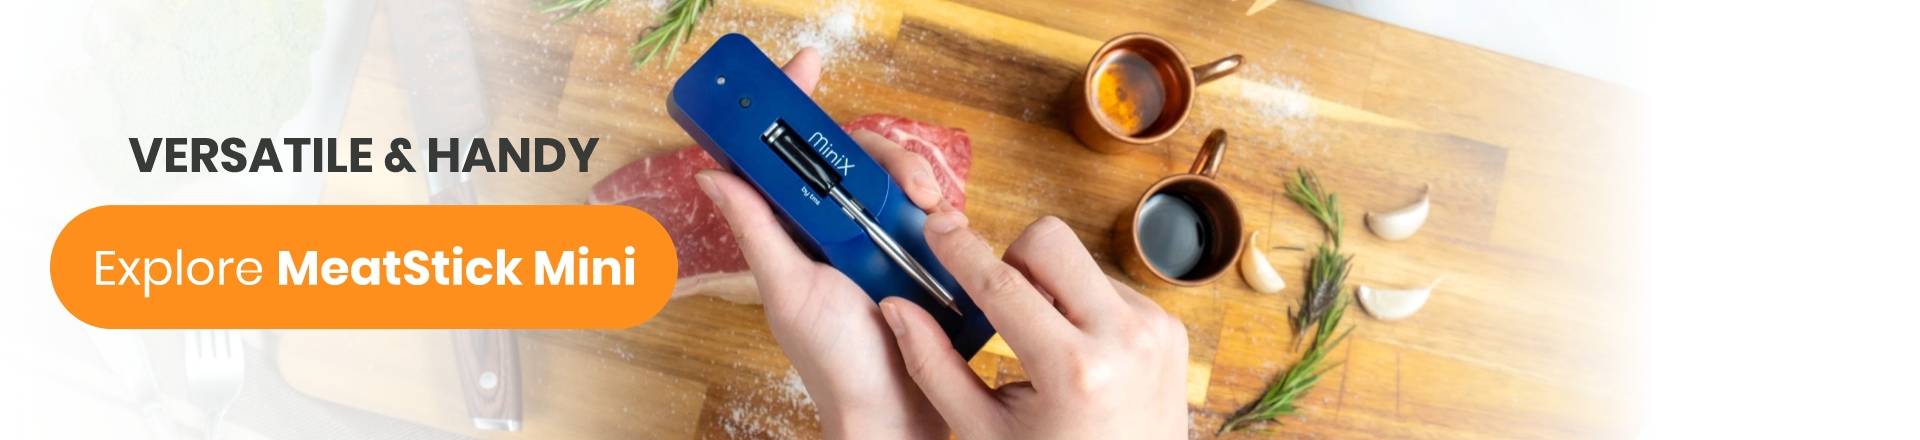 MeatStick Mini Versatile & Handy Wireless Meat Thermometer